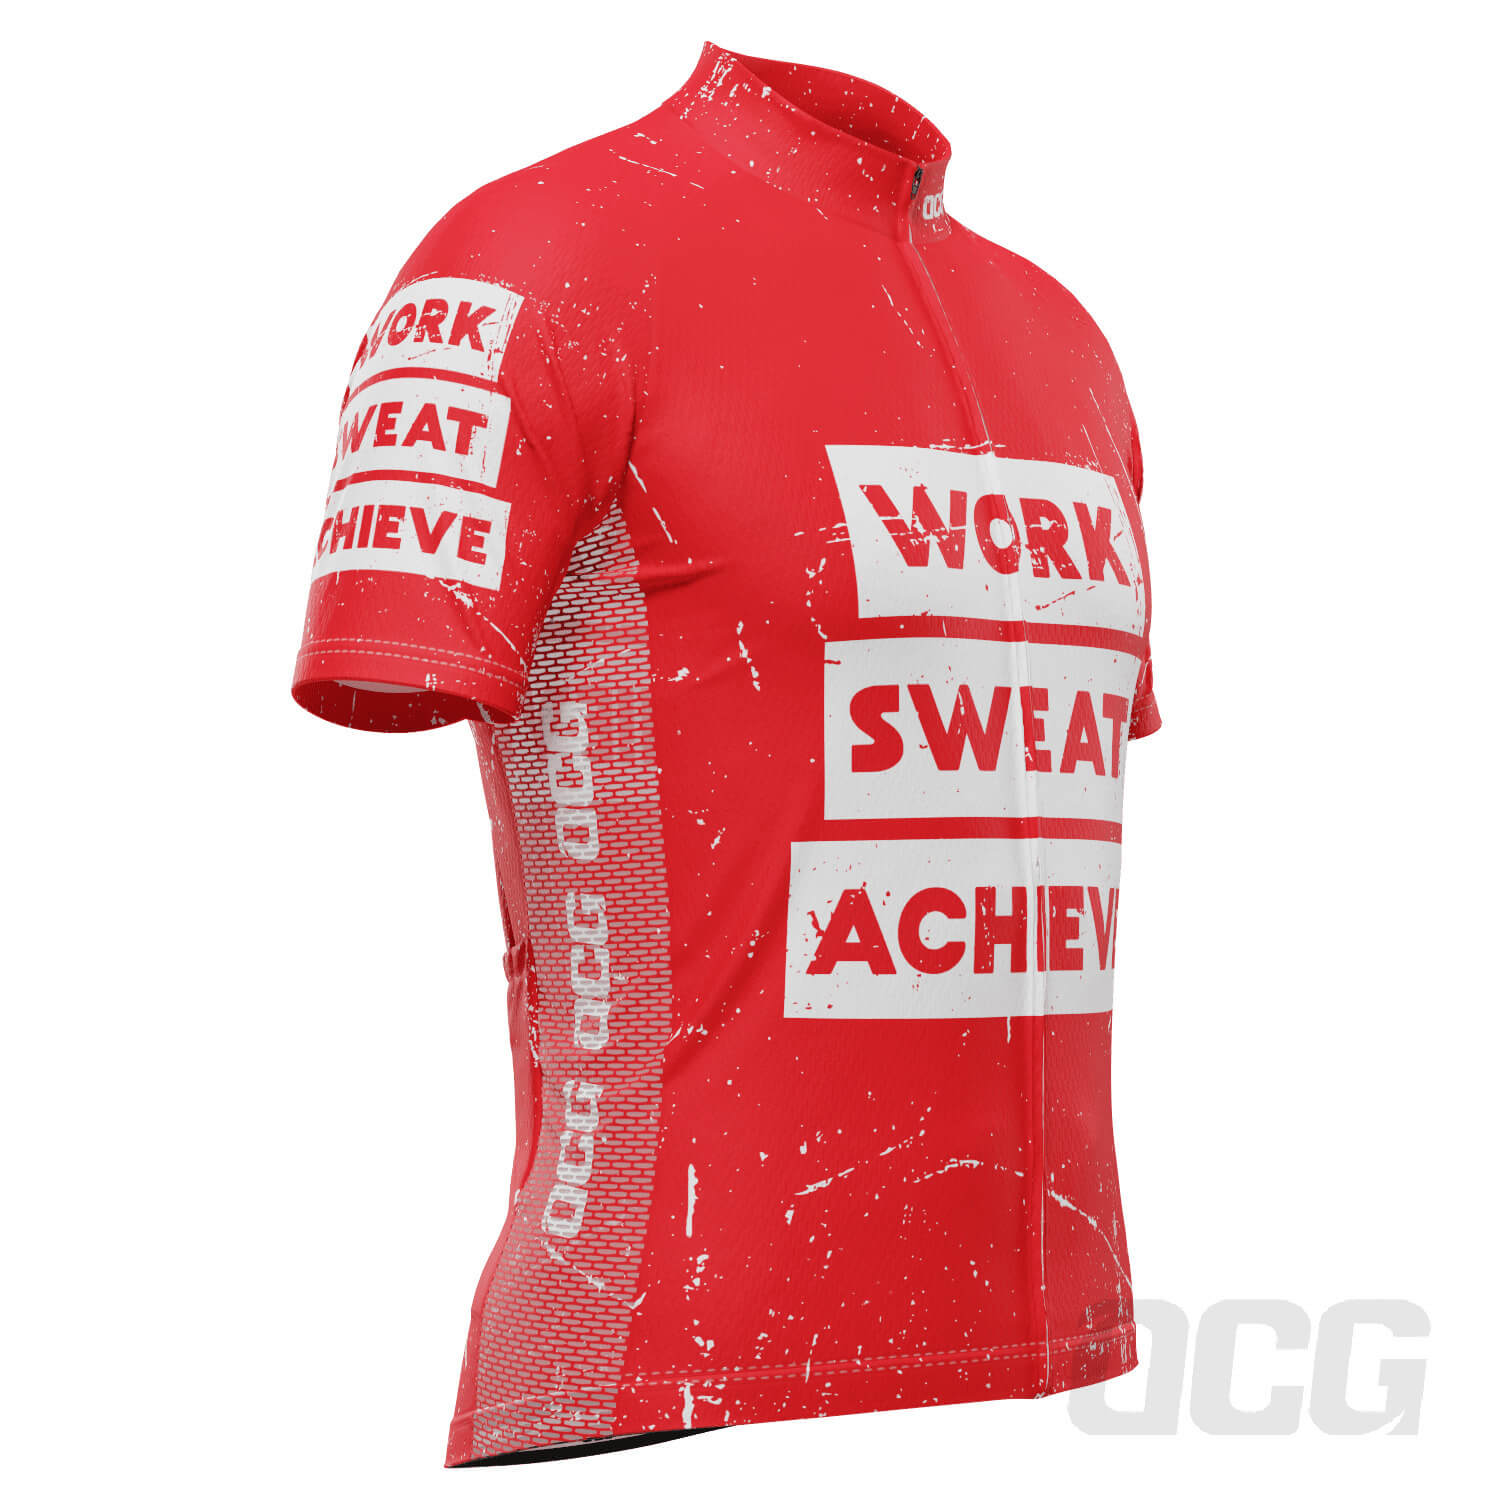 Men's Work Sweat Achieve Short Sleeve Cycling Jersey